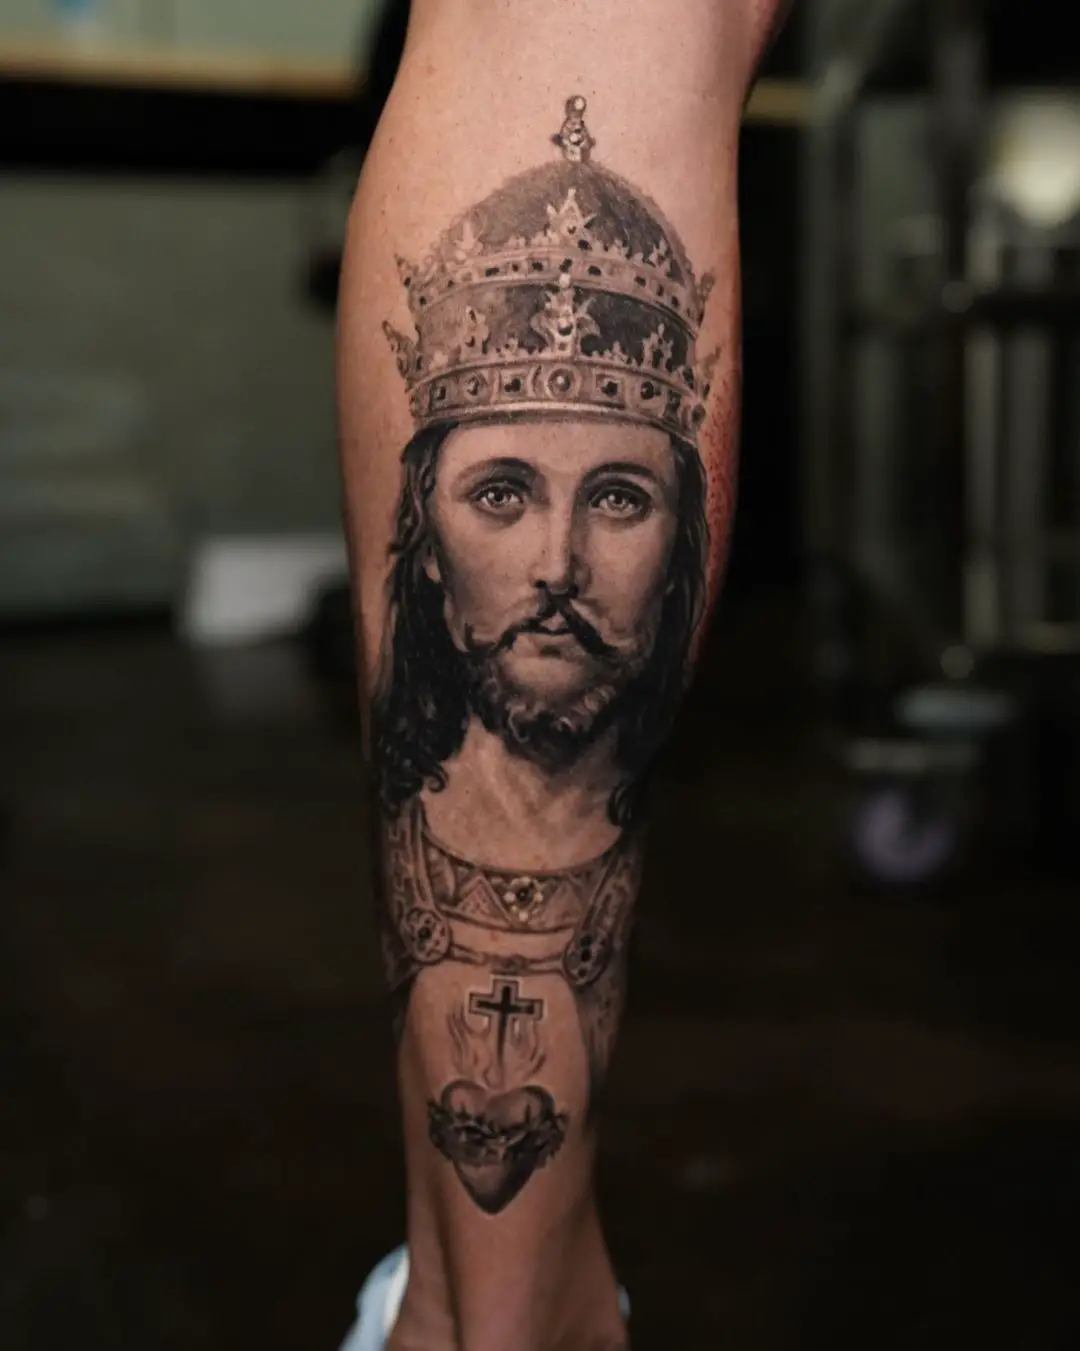 Jesus with crown design by danielrochatat2